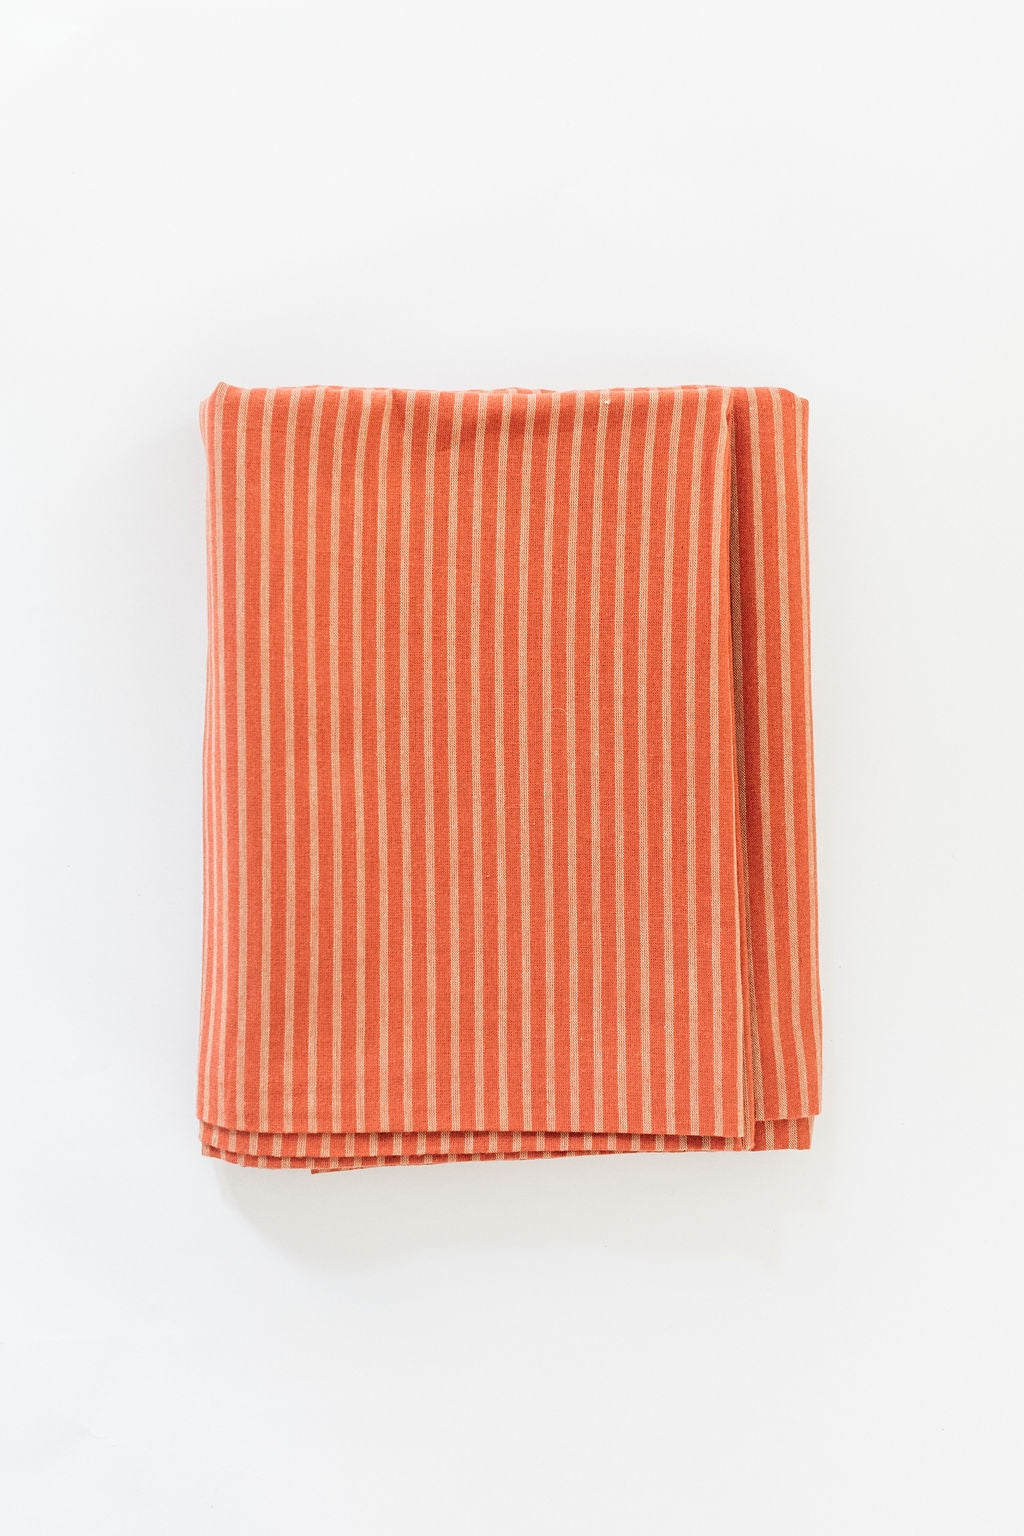 Stripe Table Cloth